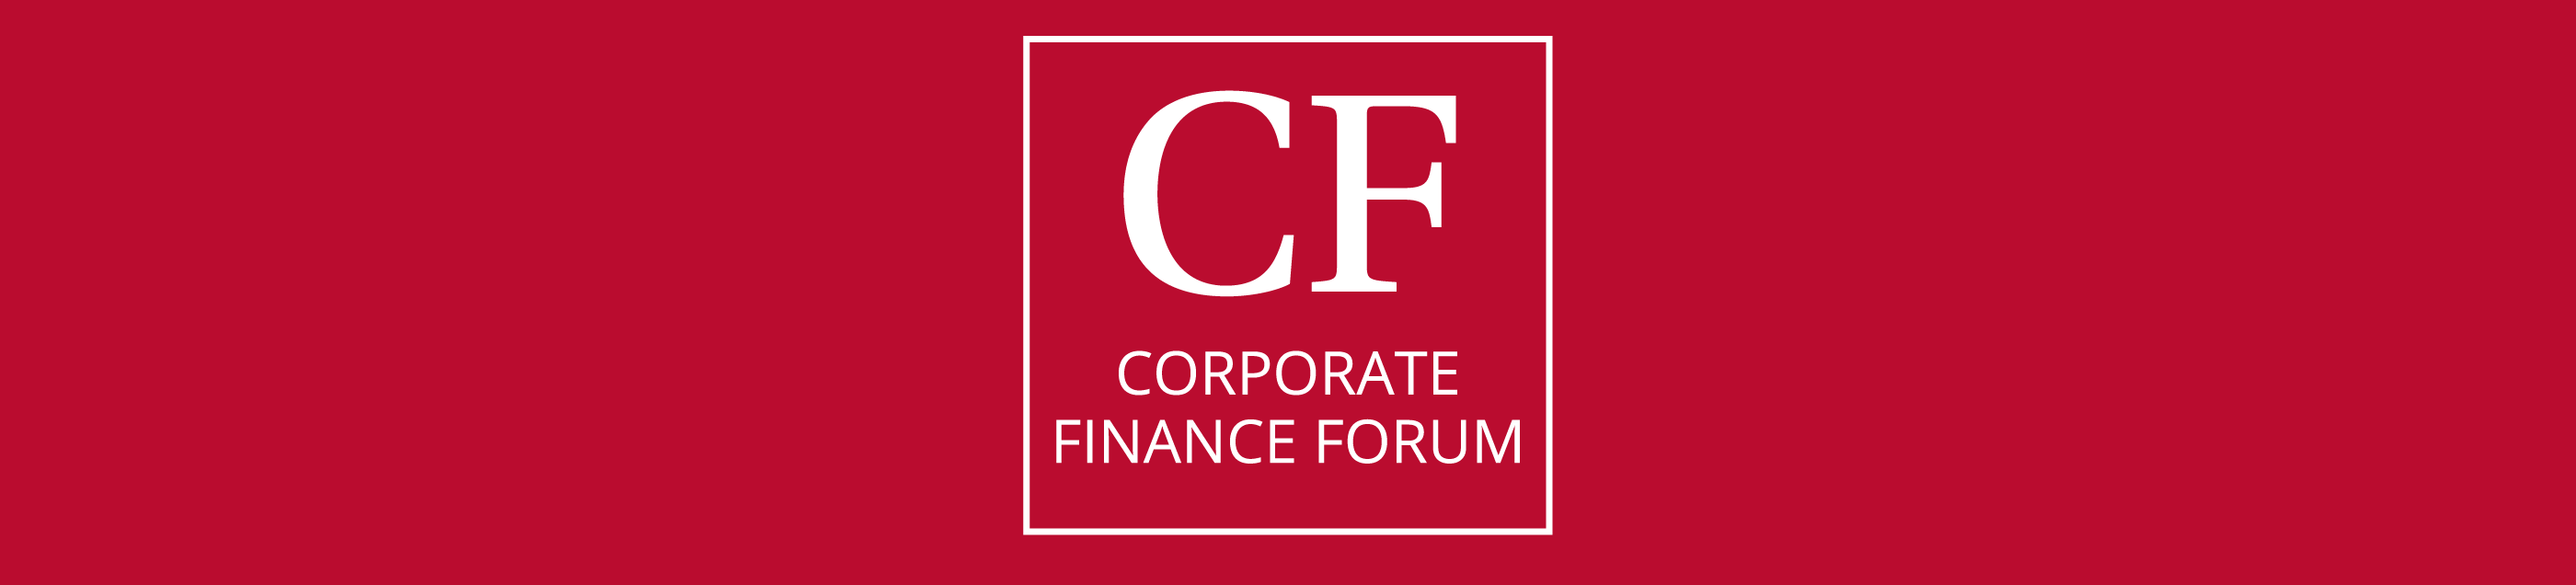 Corporate Finance Forum Header image